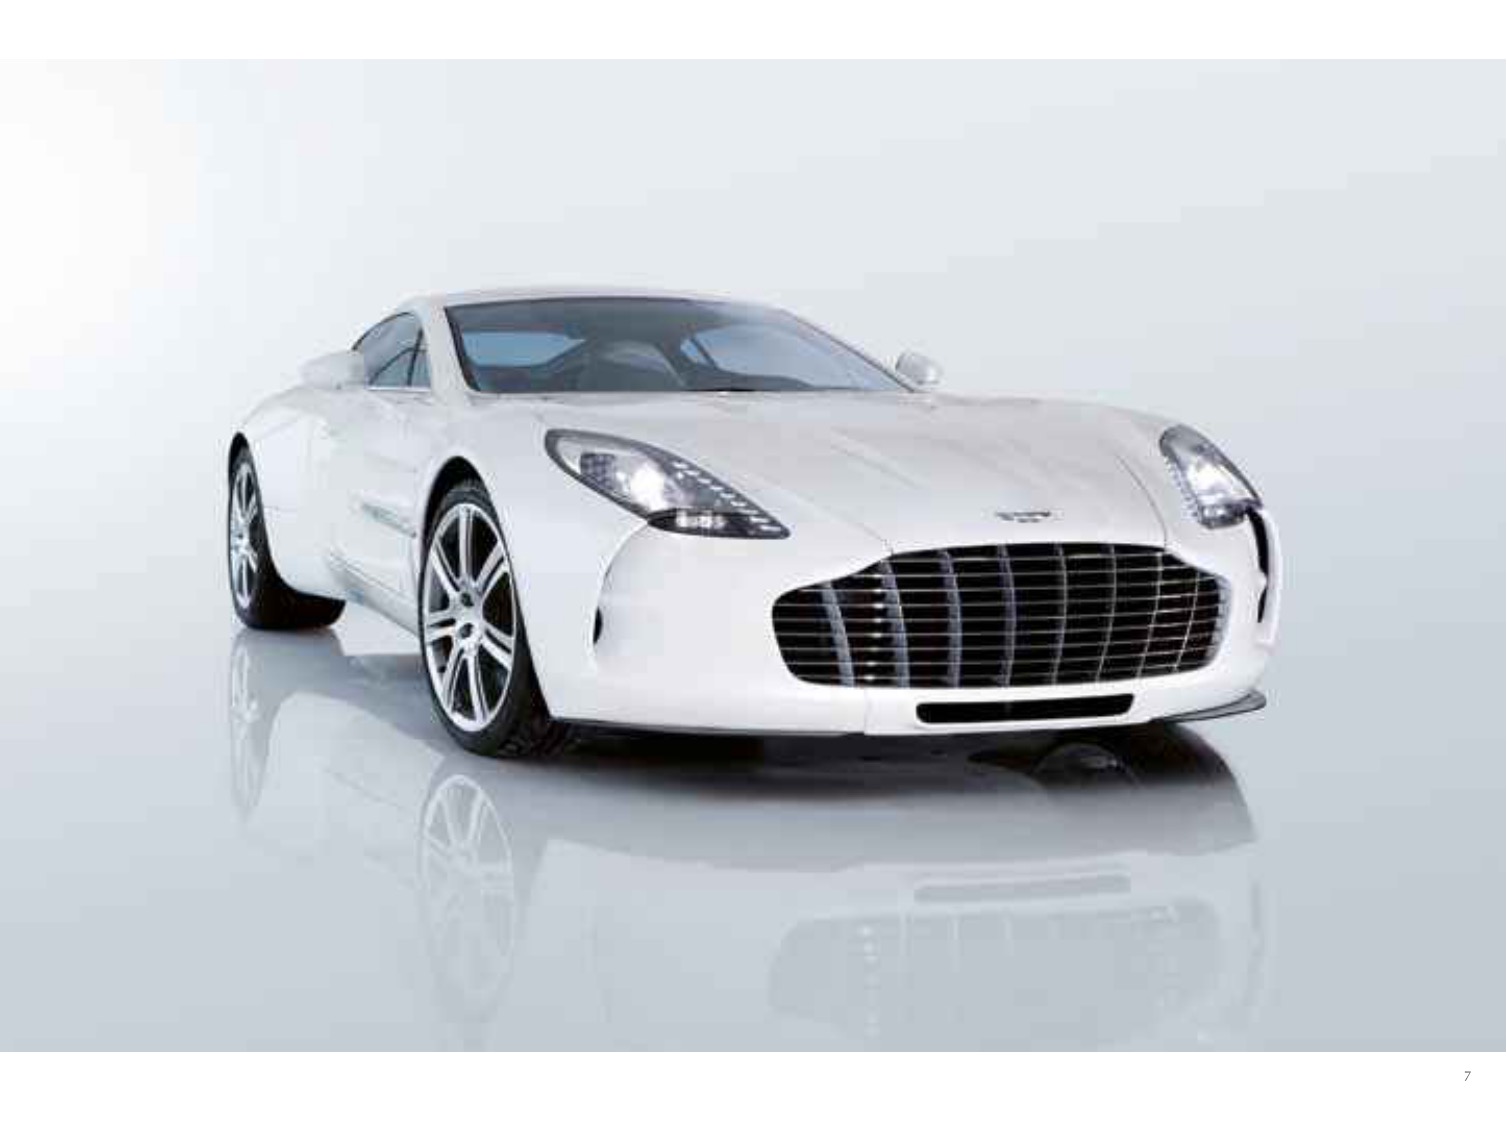 2012 Aston Martin Model Range Brochure Page 55